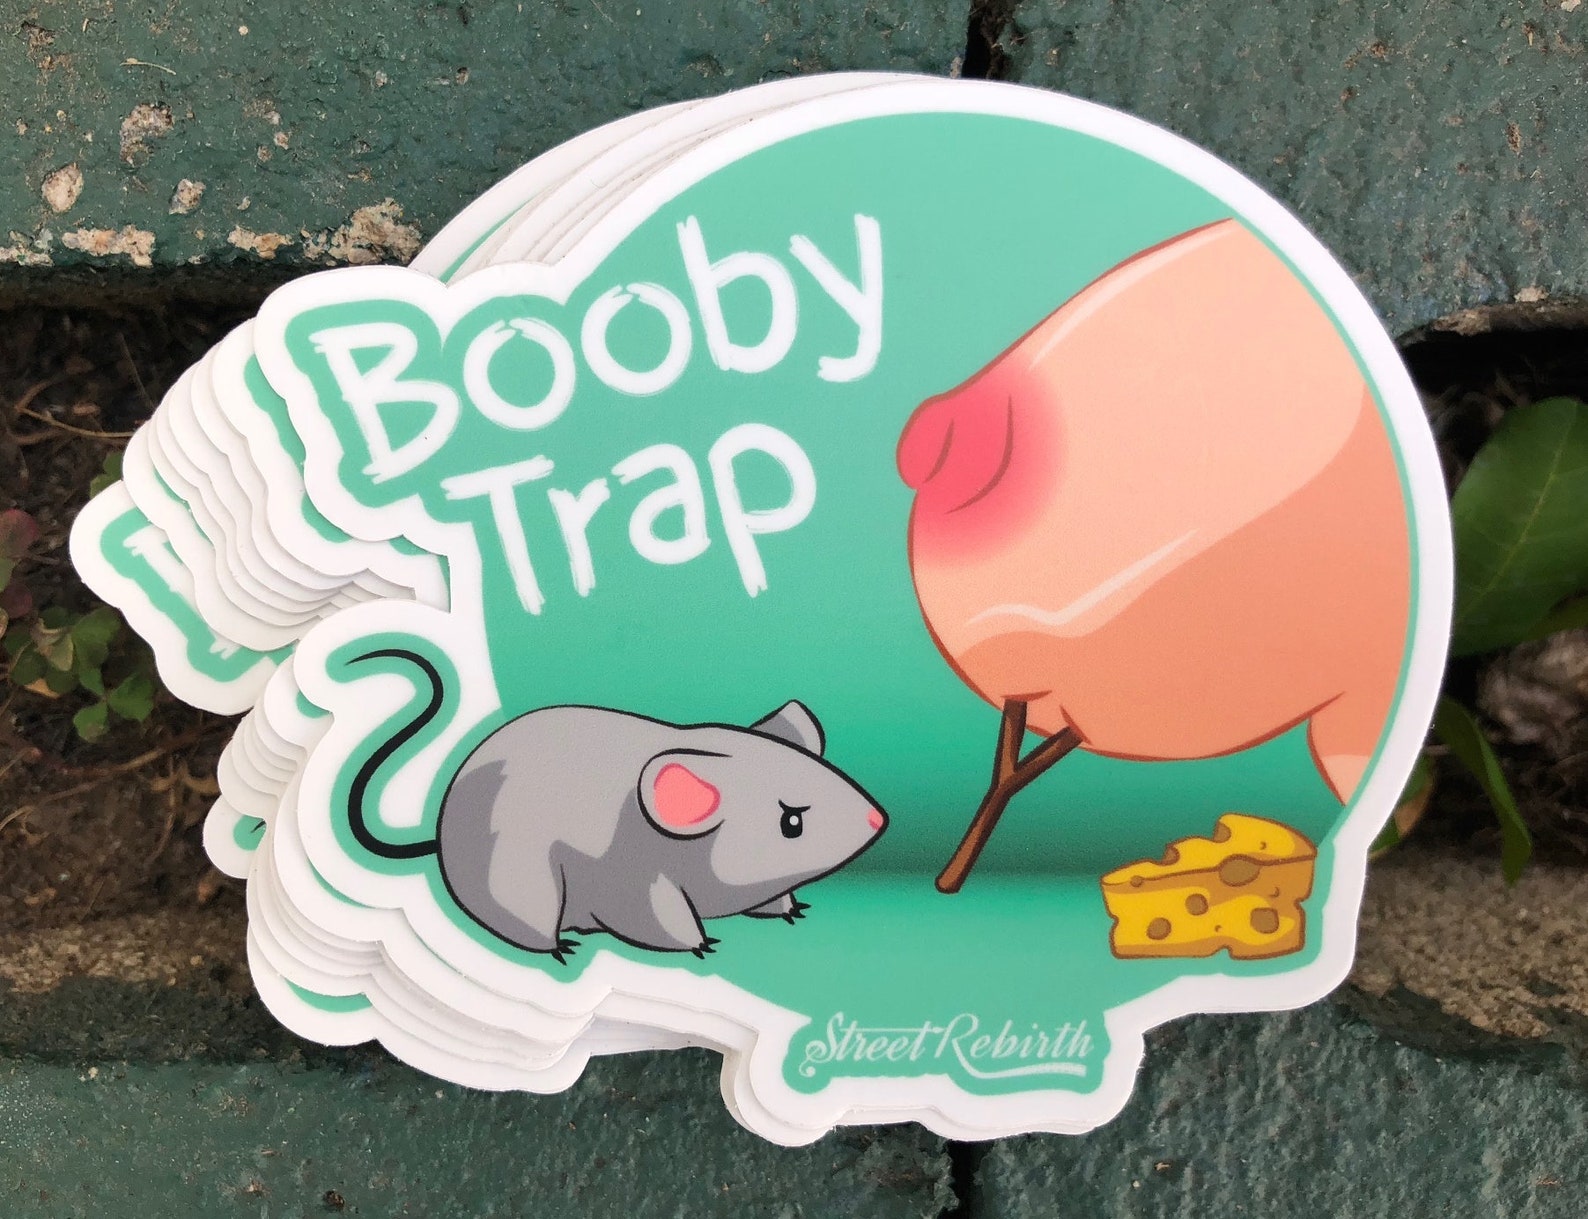 Booby trap. Bob Saget - Booby Trap. R6 Booby Trap. Трэп Стикеры.